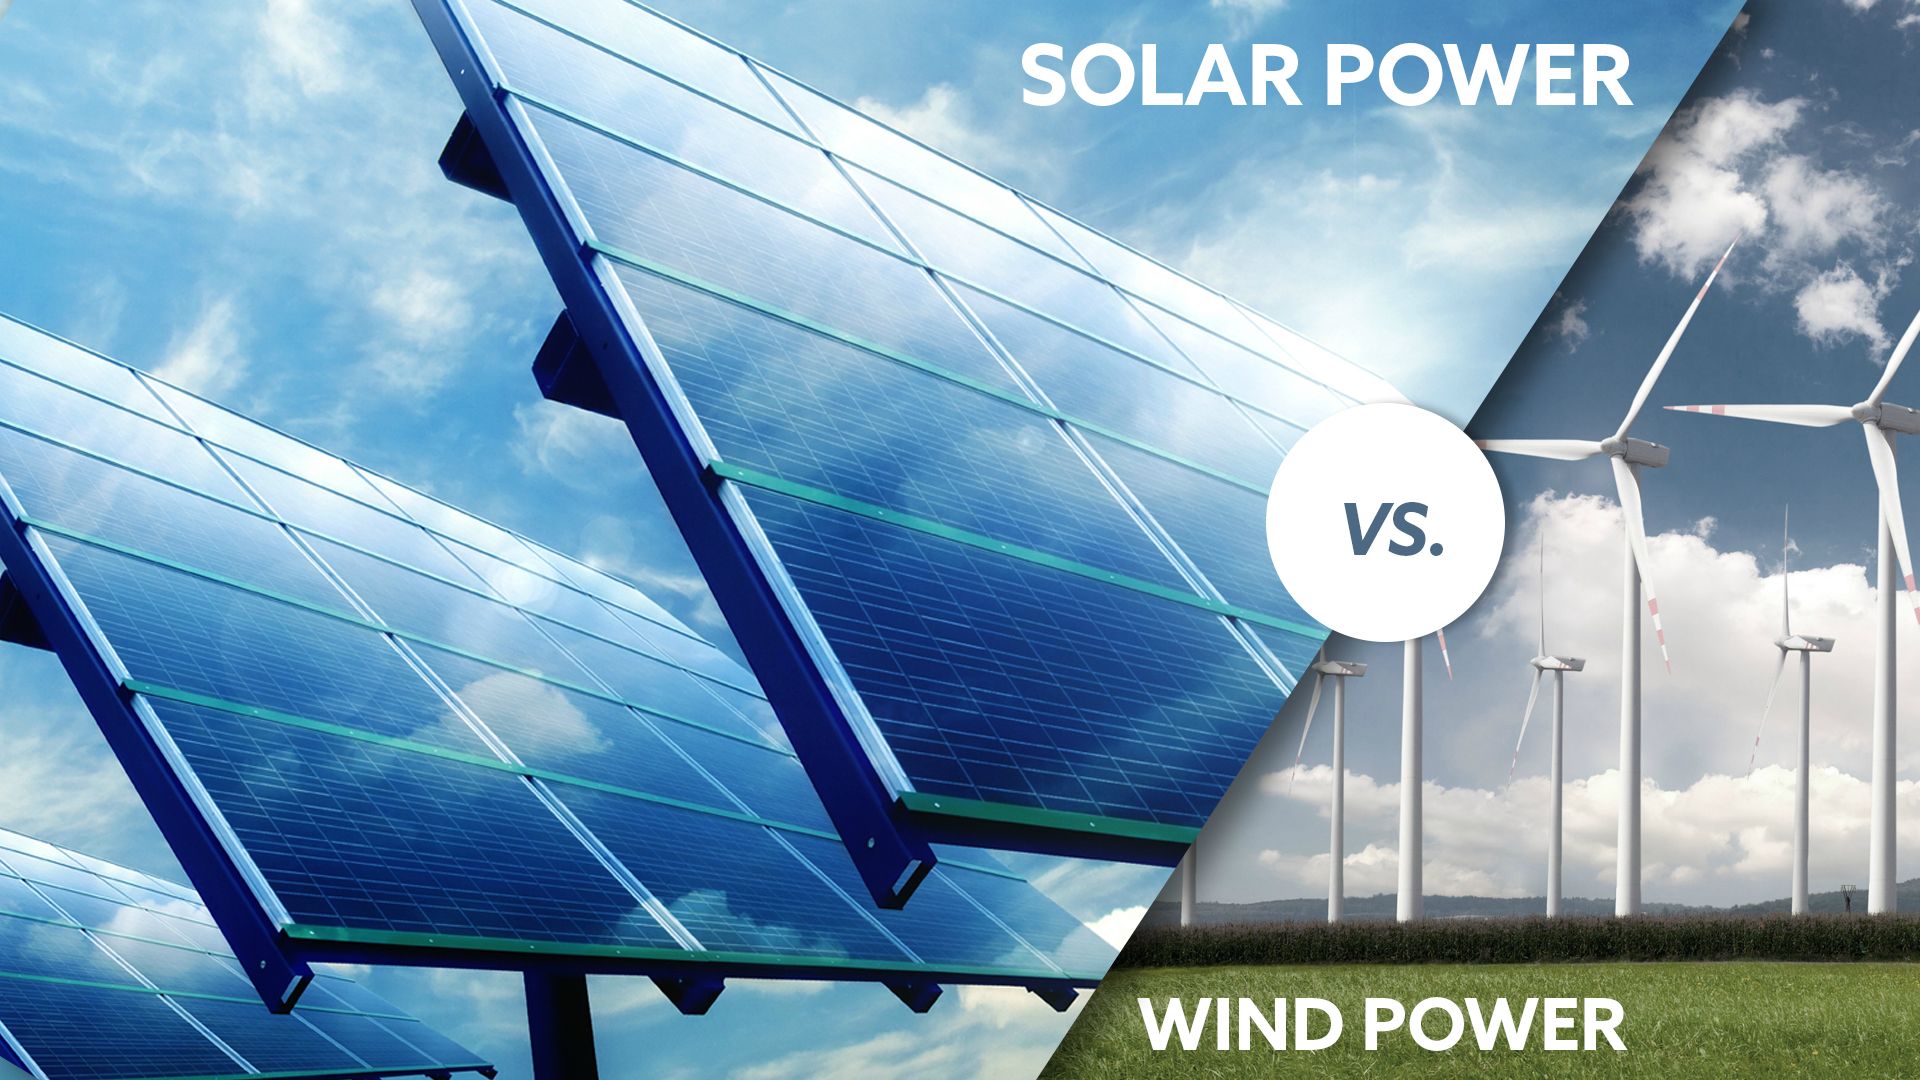 Wind Power vs. Solar Power